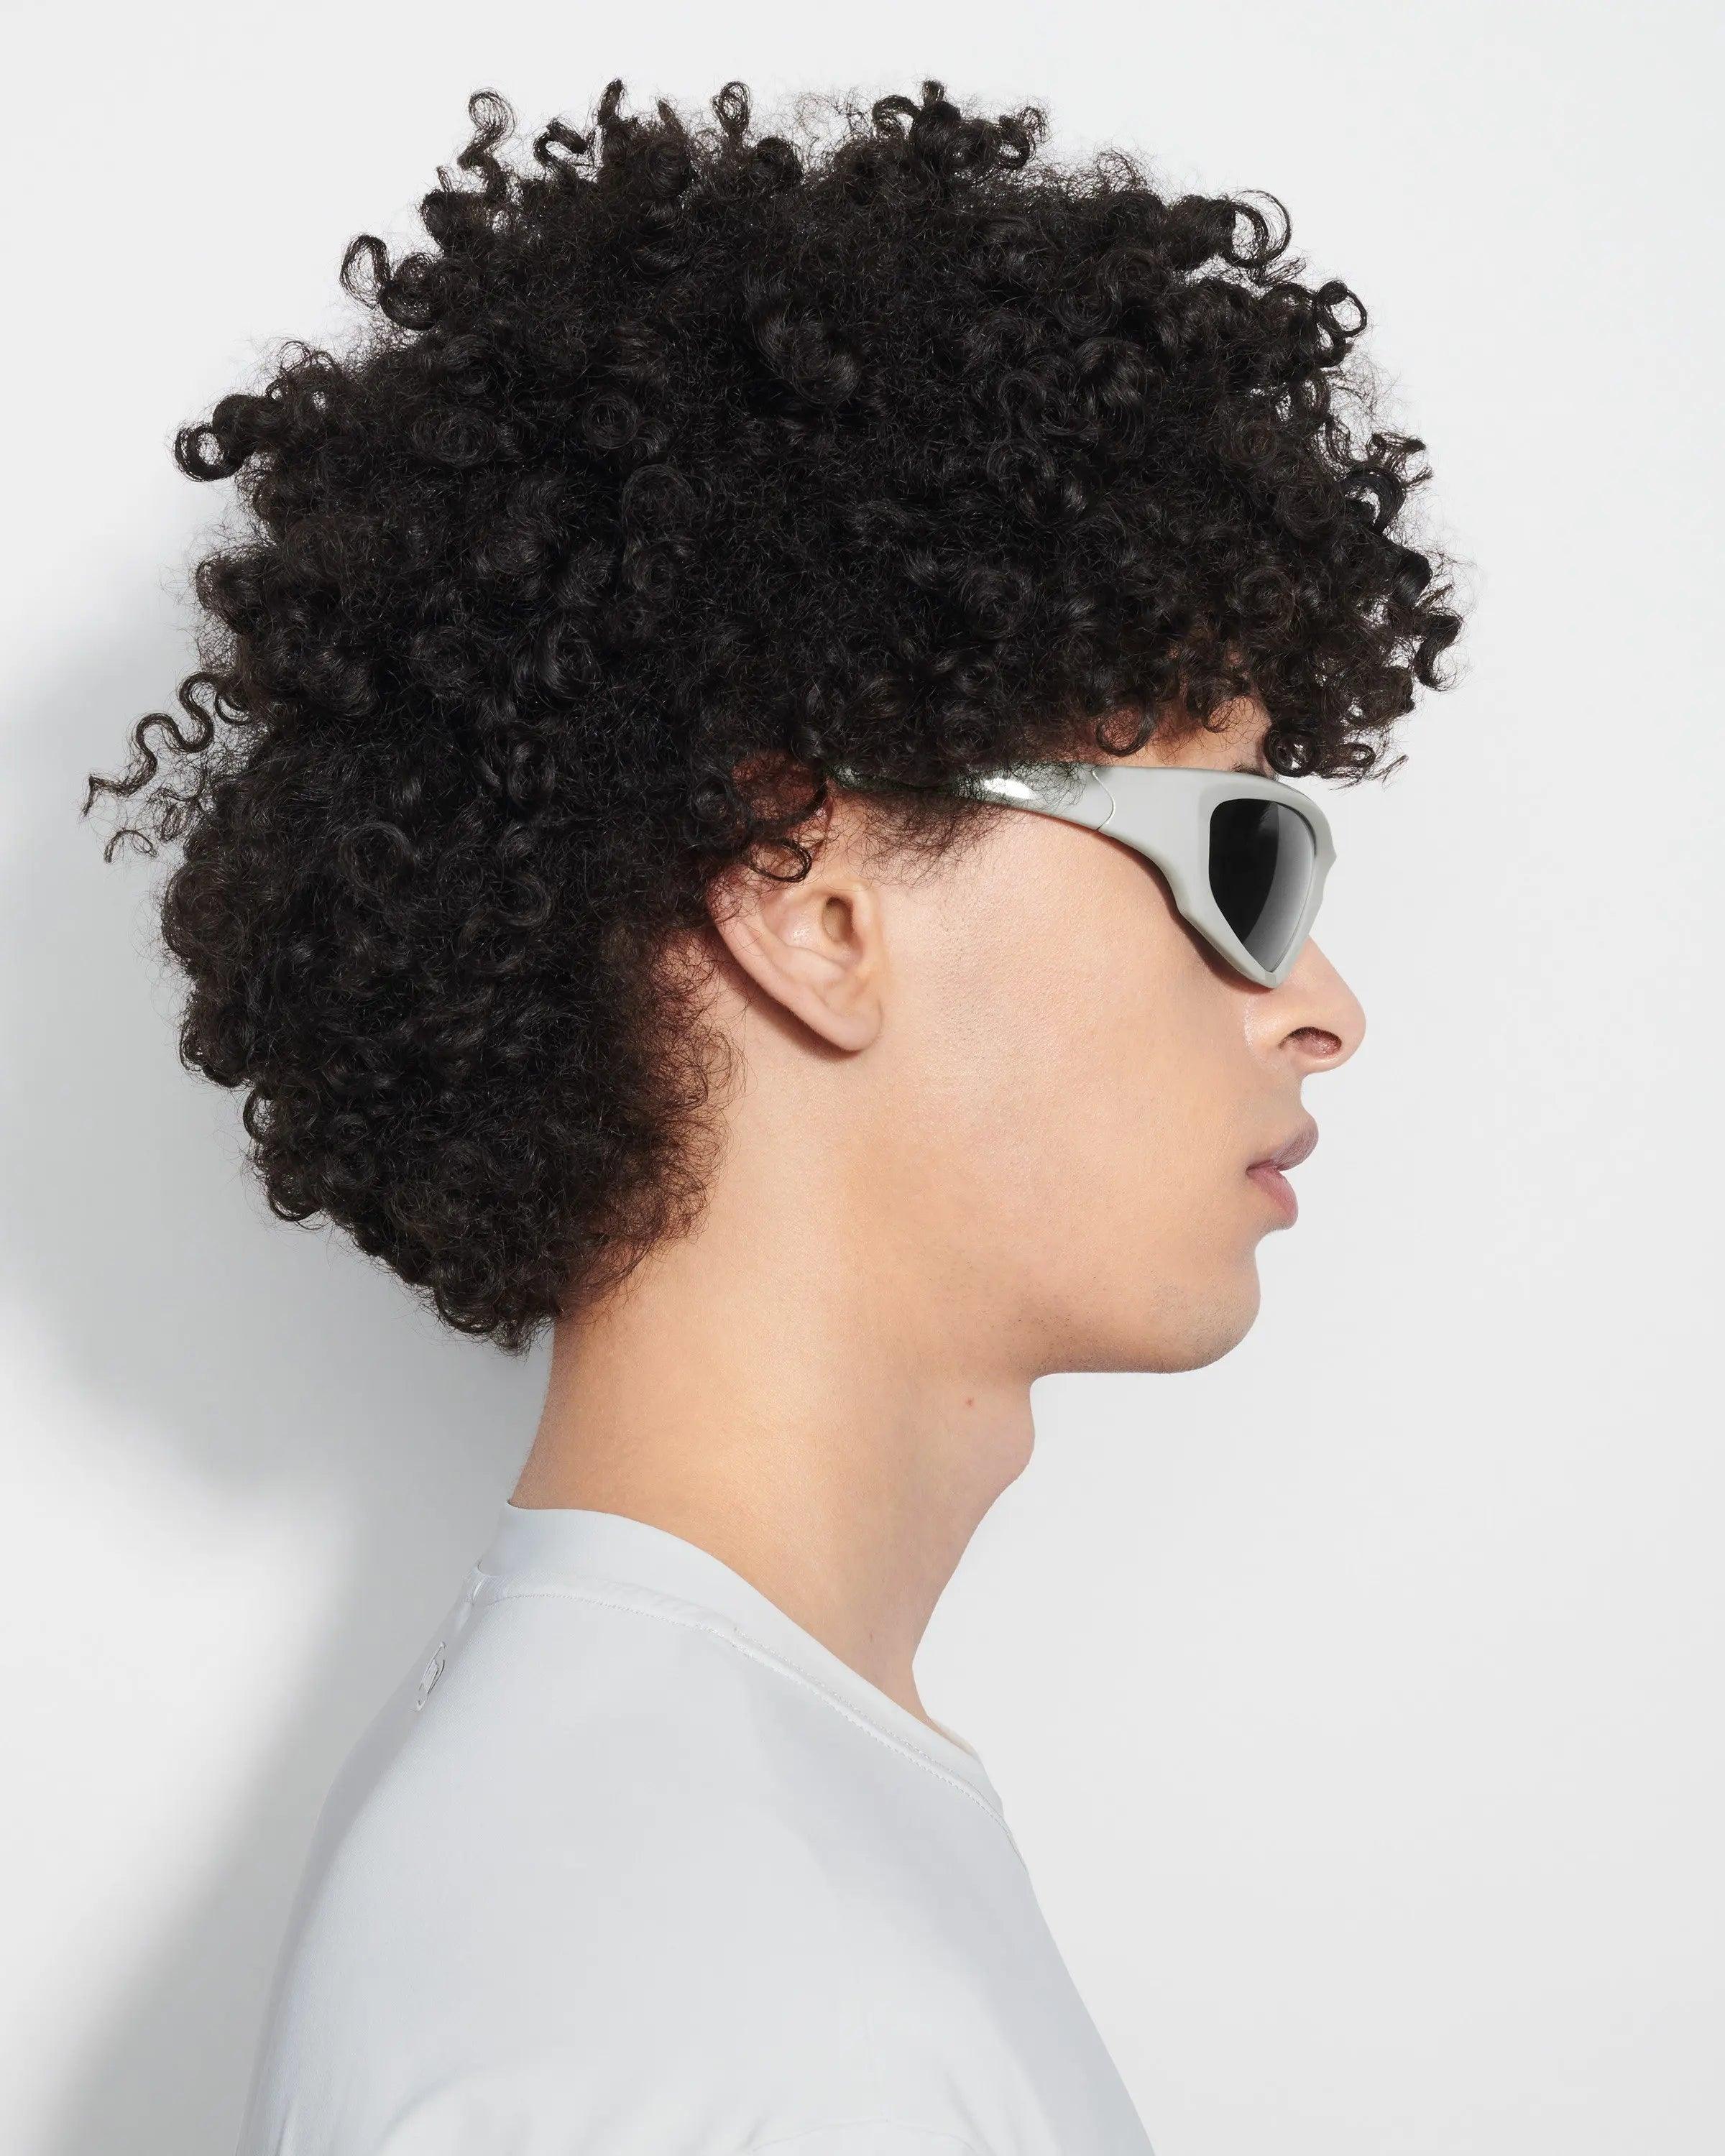 CHIMI Flash Gray - One size - Sunglasses